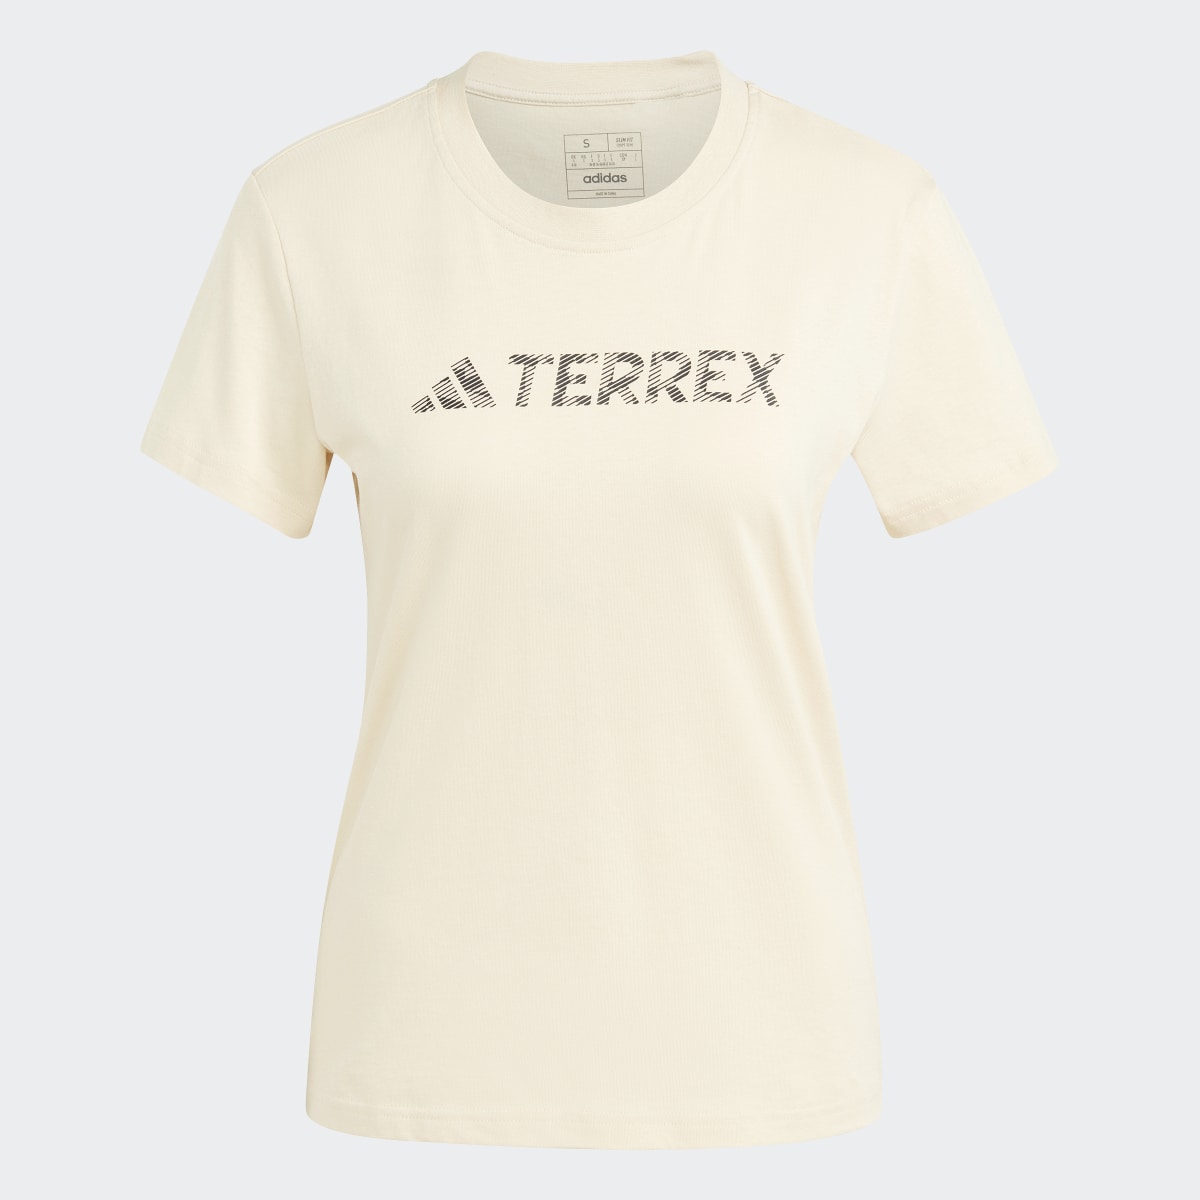 Adidas T-shirt Terrex Classic Logo. 5